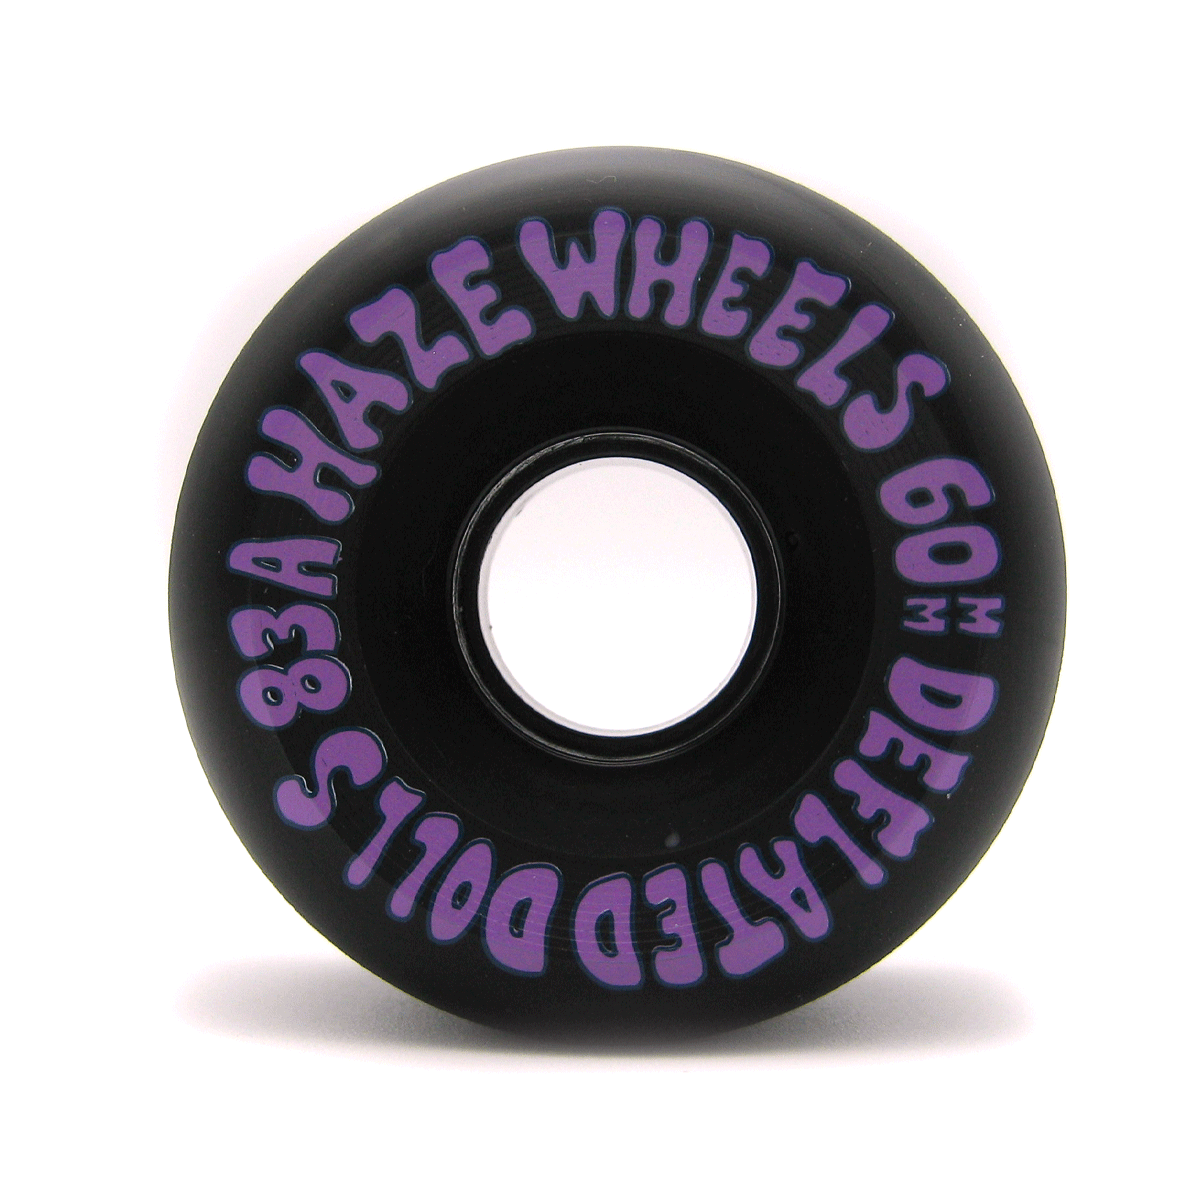 Haze wheels Deflated Dolls 2 60mm 83a